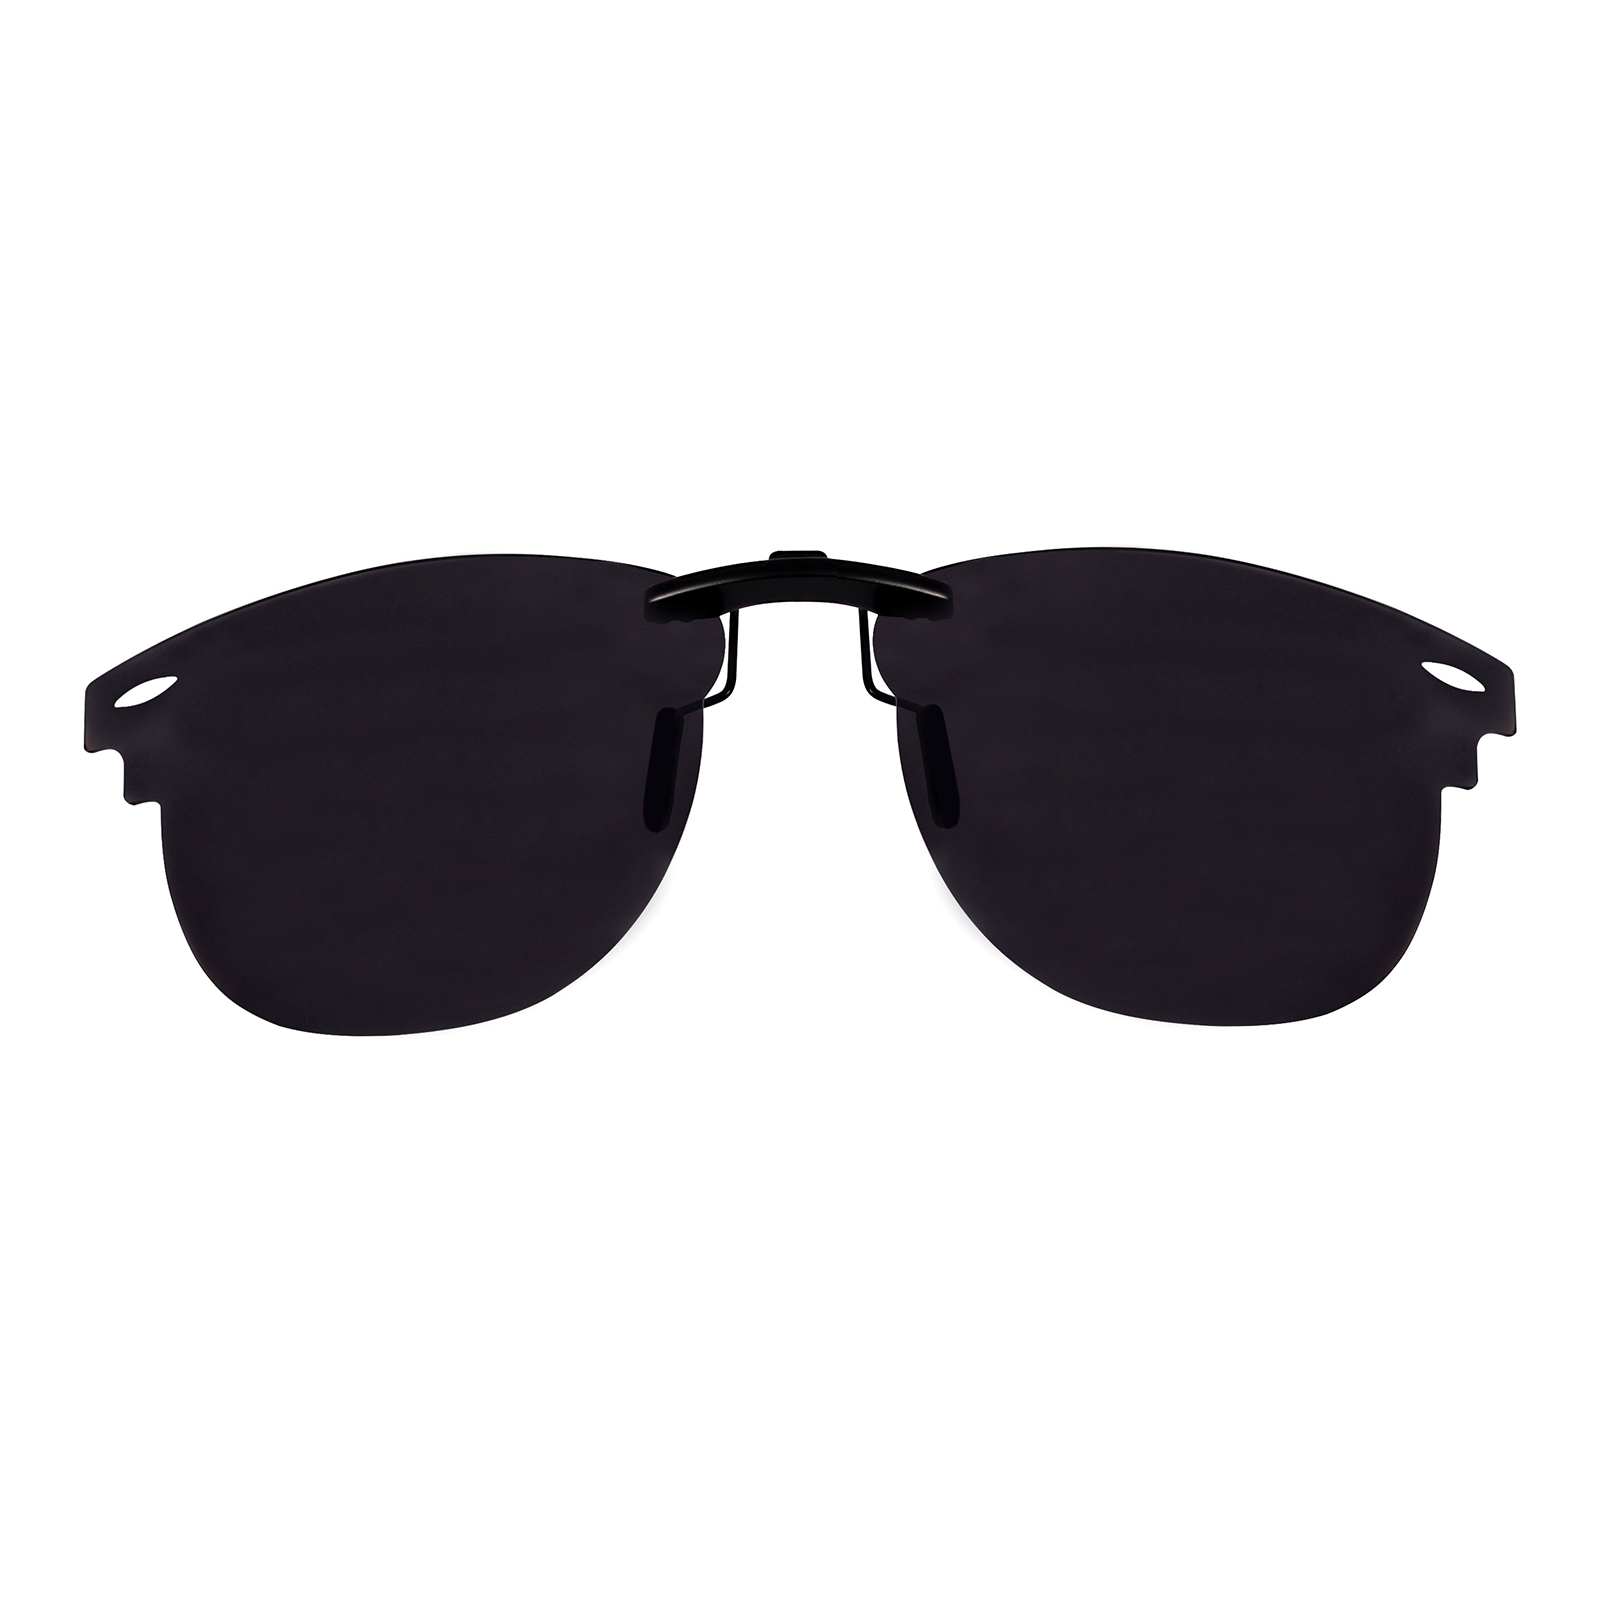 Ray-Ban Sunglasses CLUBMASTER RB3016 - 990/7Q | blinkblink.pl